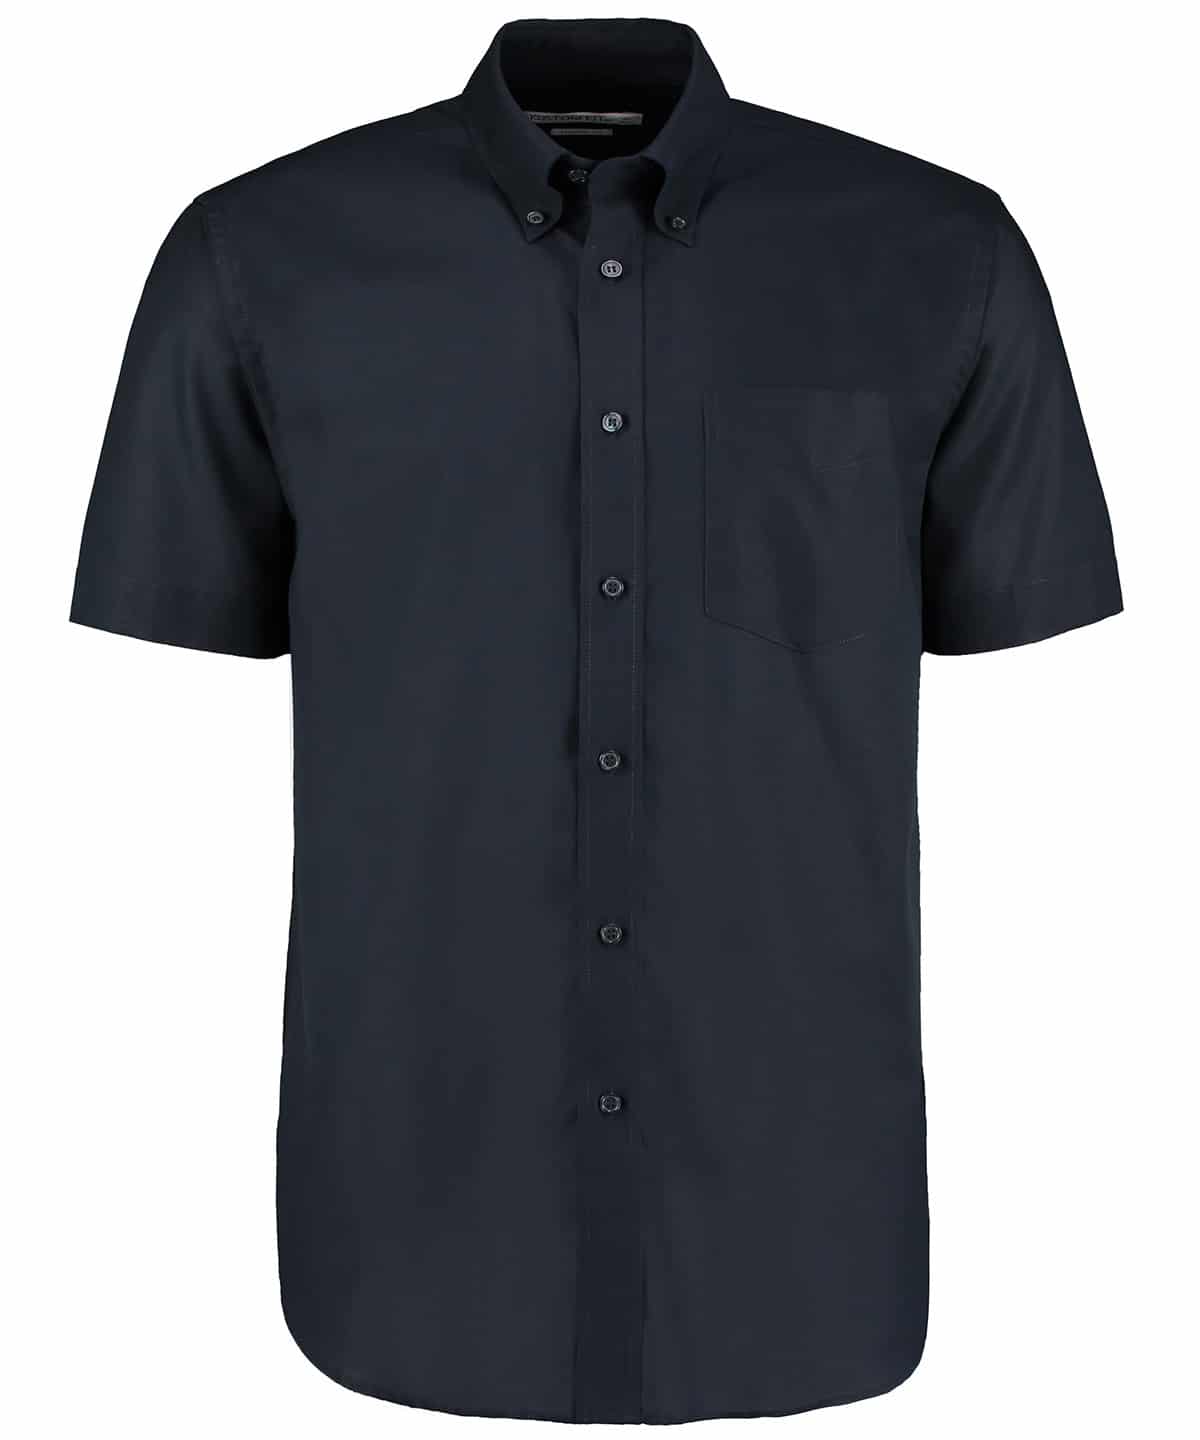 Kustom Kit Workplace Short-sleeved Oxford Shirt - Men's Fit